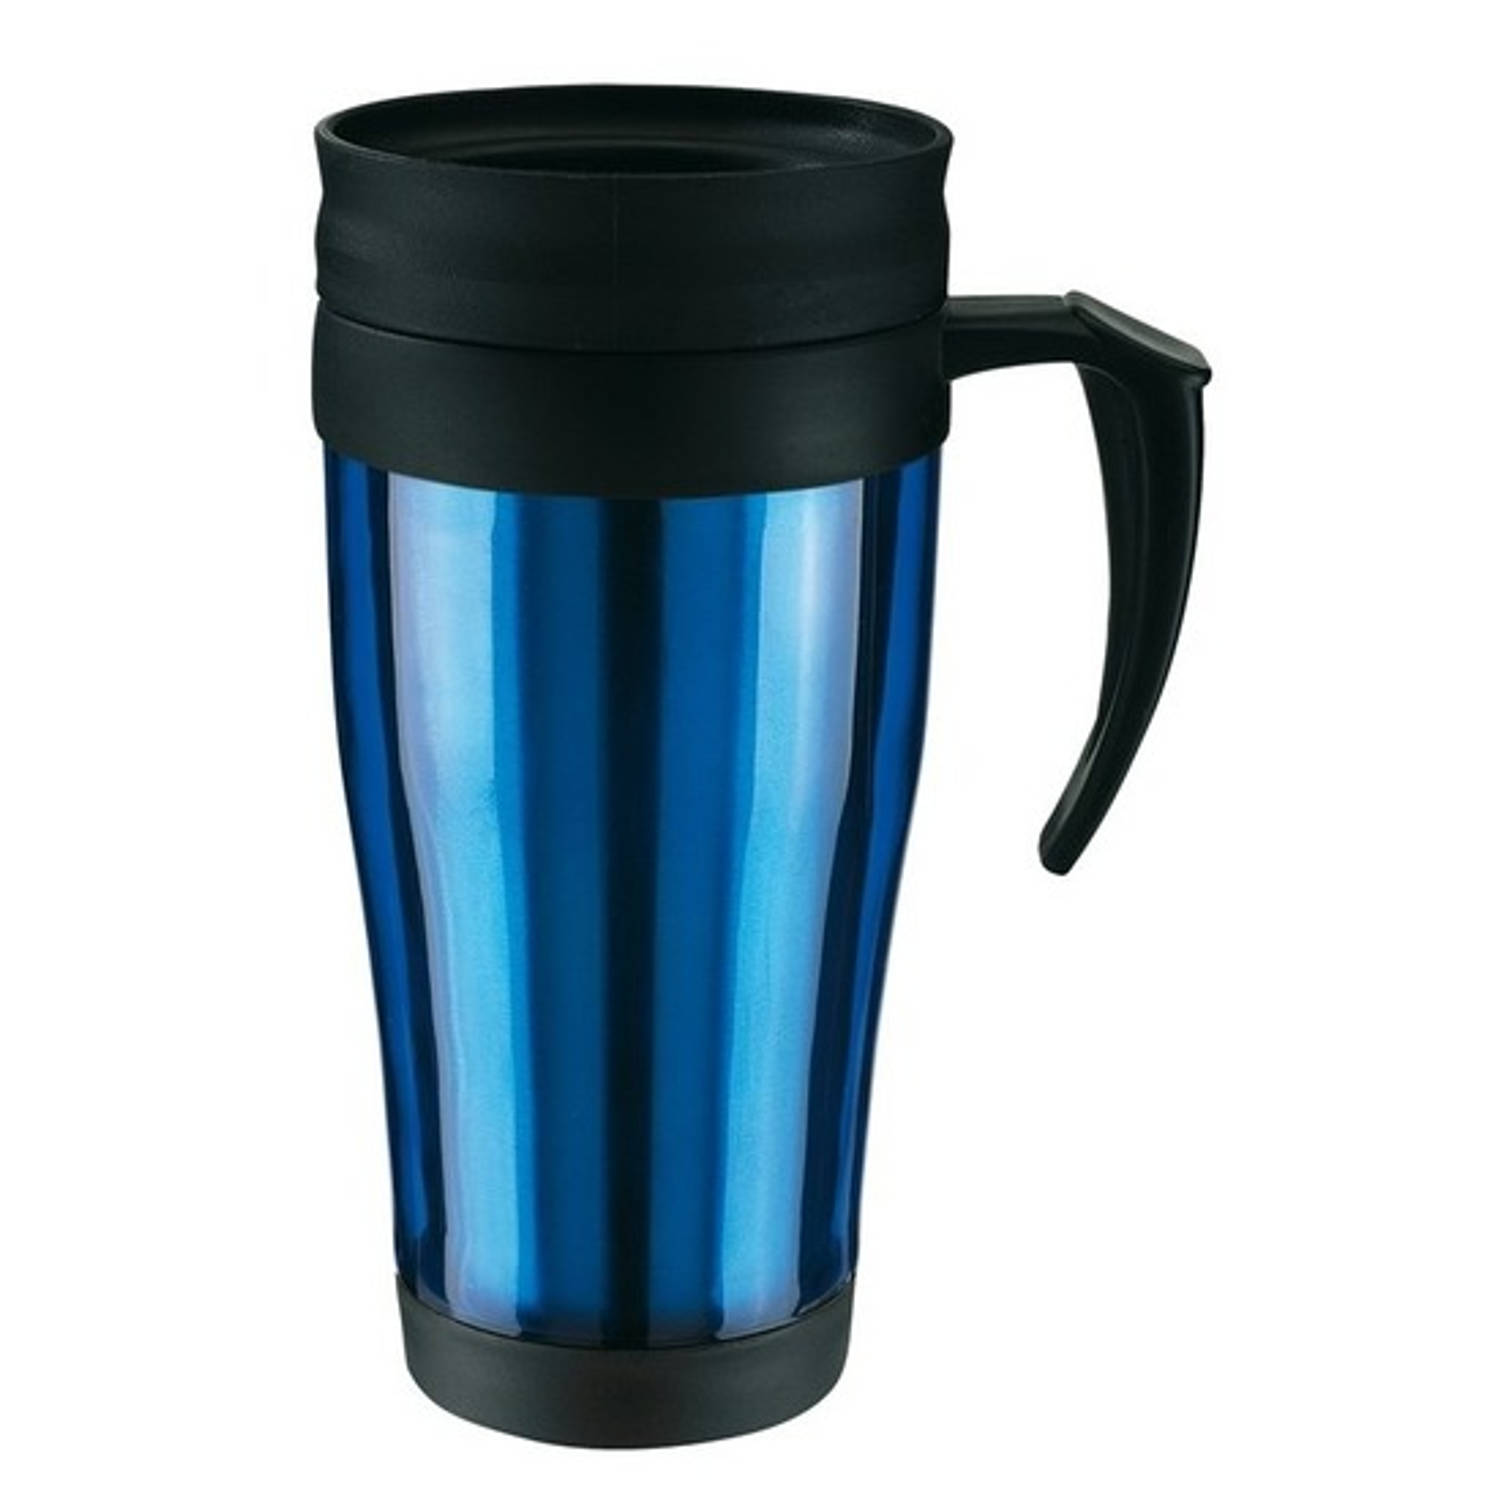 Thermosbeker-warmhoudbeker Blauw-zwart 400 Ml Thermo Koffie-thee Bekers Dubbelwandig Met Schroefdop